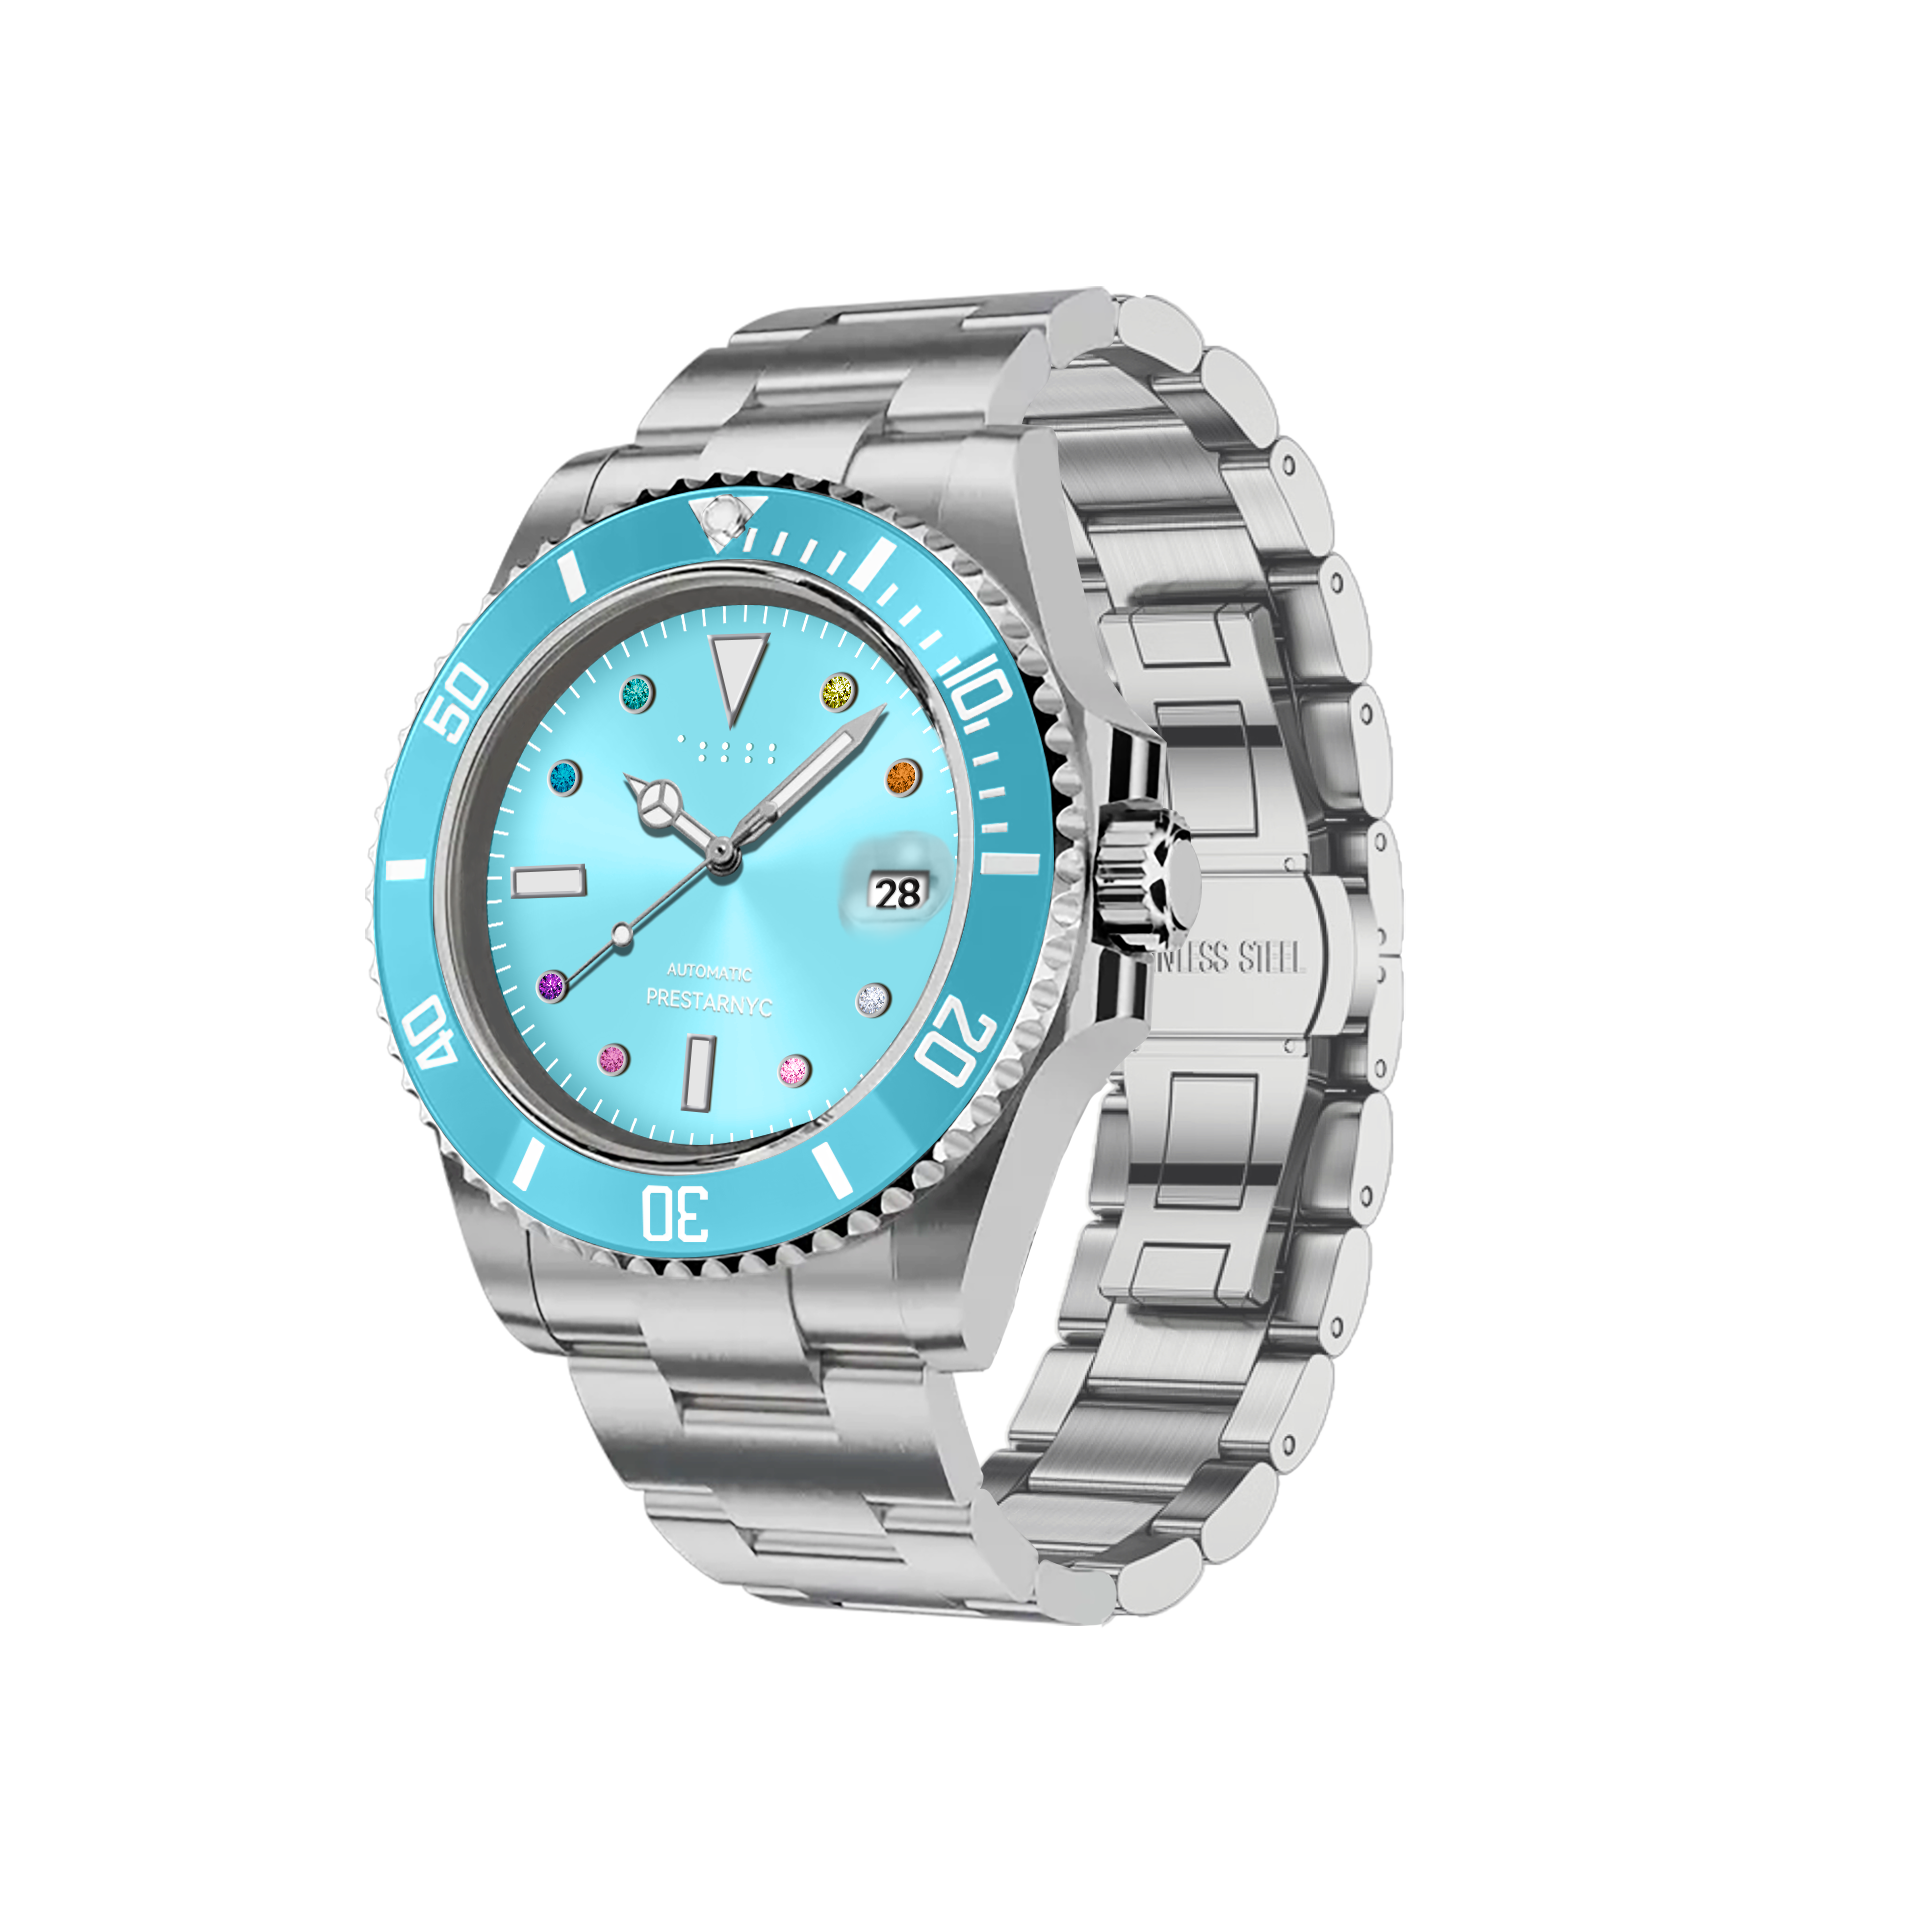 Prestar NYC Aquaman Classic Multi-color Diamond Watch (Ocean Blue)